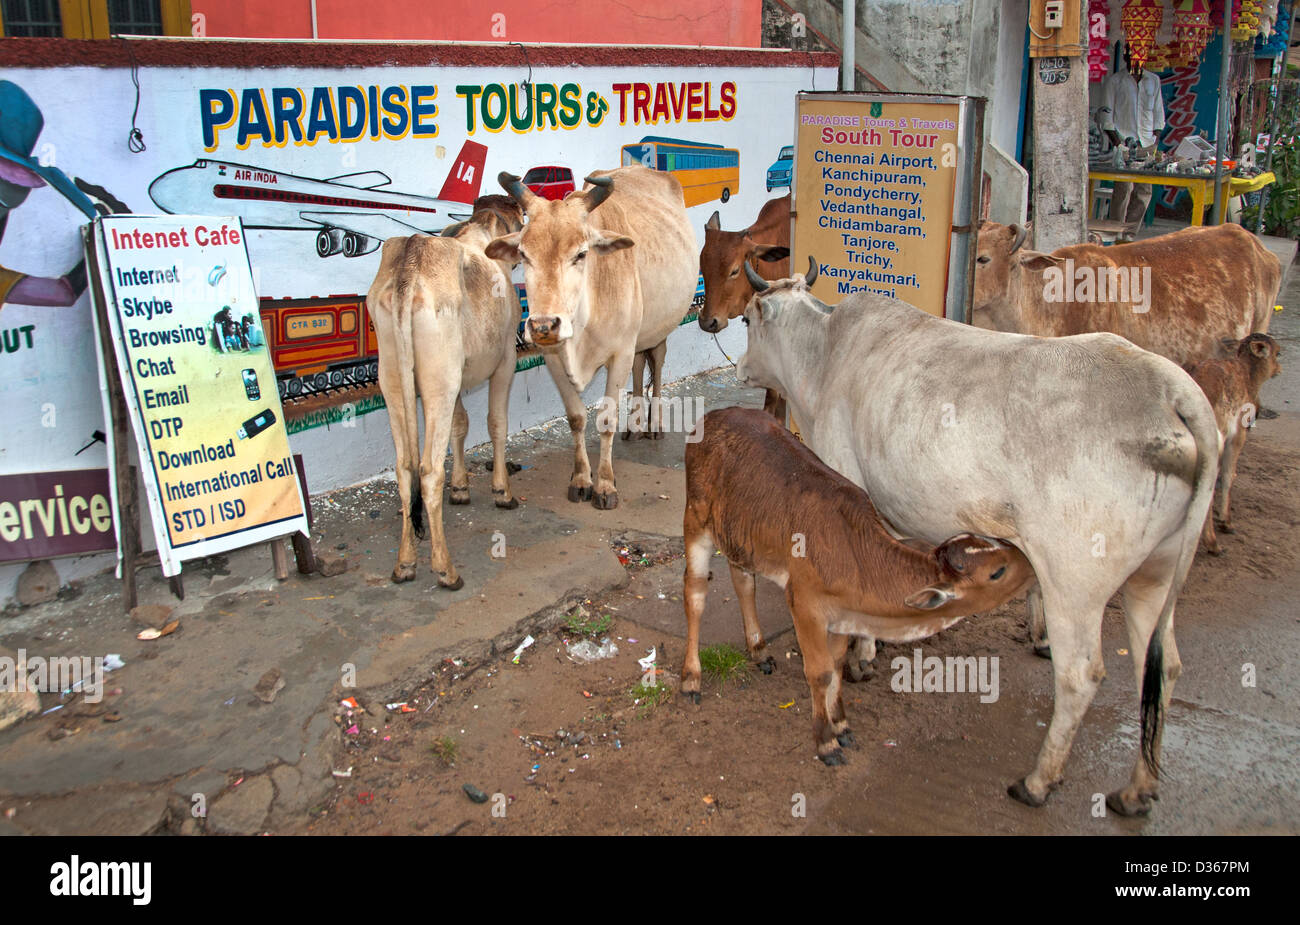 Holy Cows Travel agency Travels Paradise Tours Covelong ( Kovalam or Cobelon ) India Tamil Nadu Stock Photo